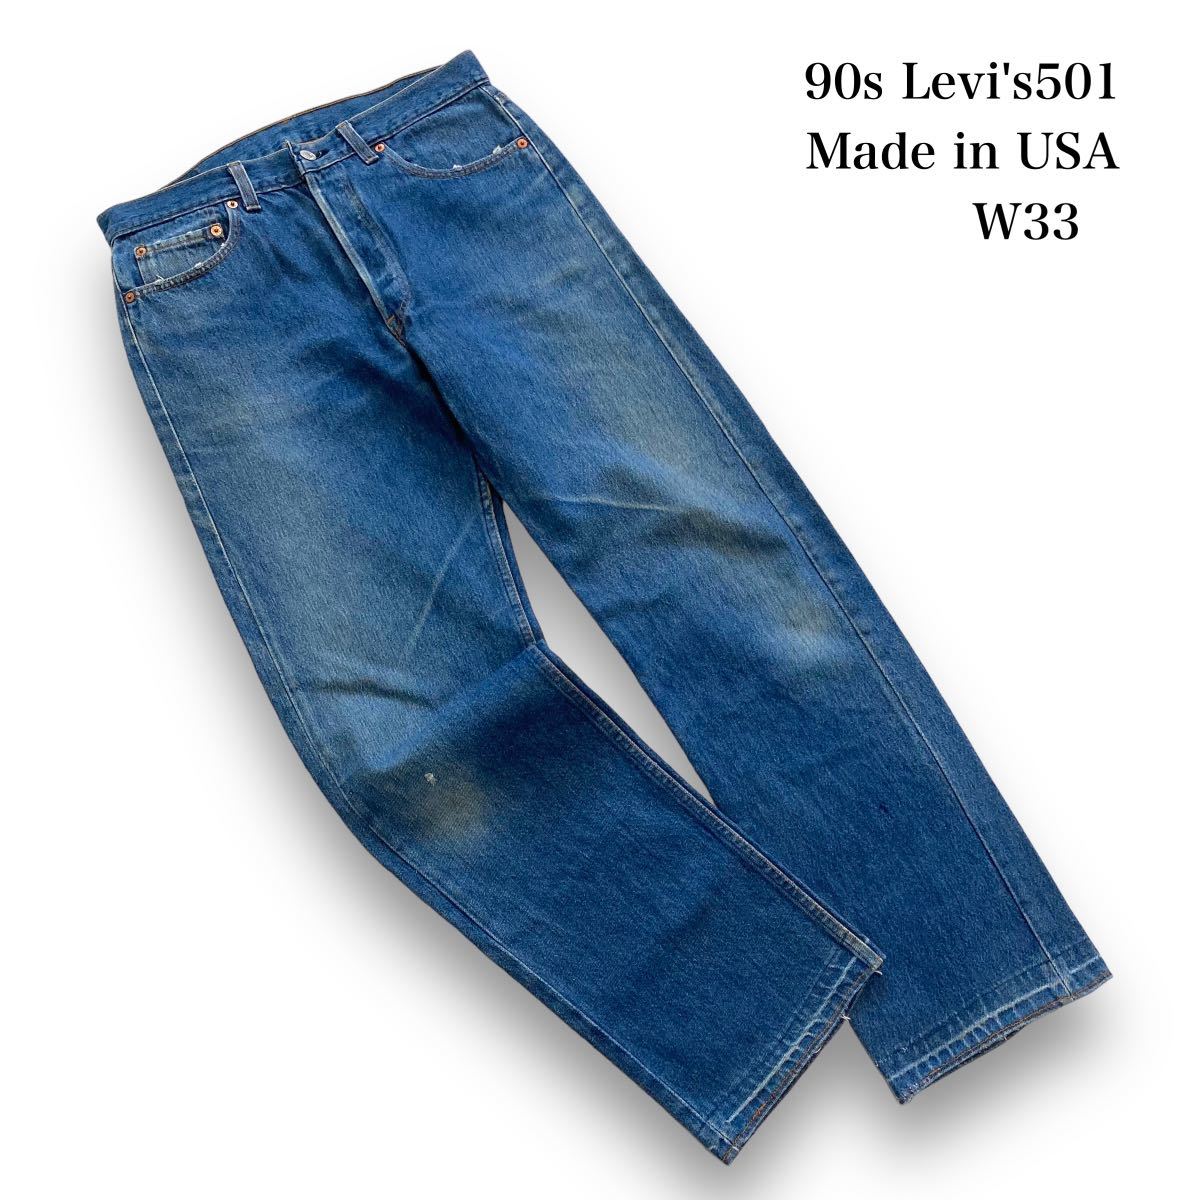 【Levi's】90s リーバイス501 デニムパンツ 赤文字 ヴィンテージ 古着 USA製 アメリカ製 ジーンズ LEVI'S 90年代初頭  ジーパン ビンテージ